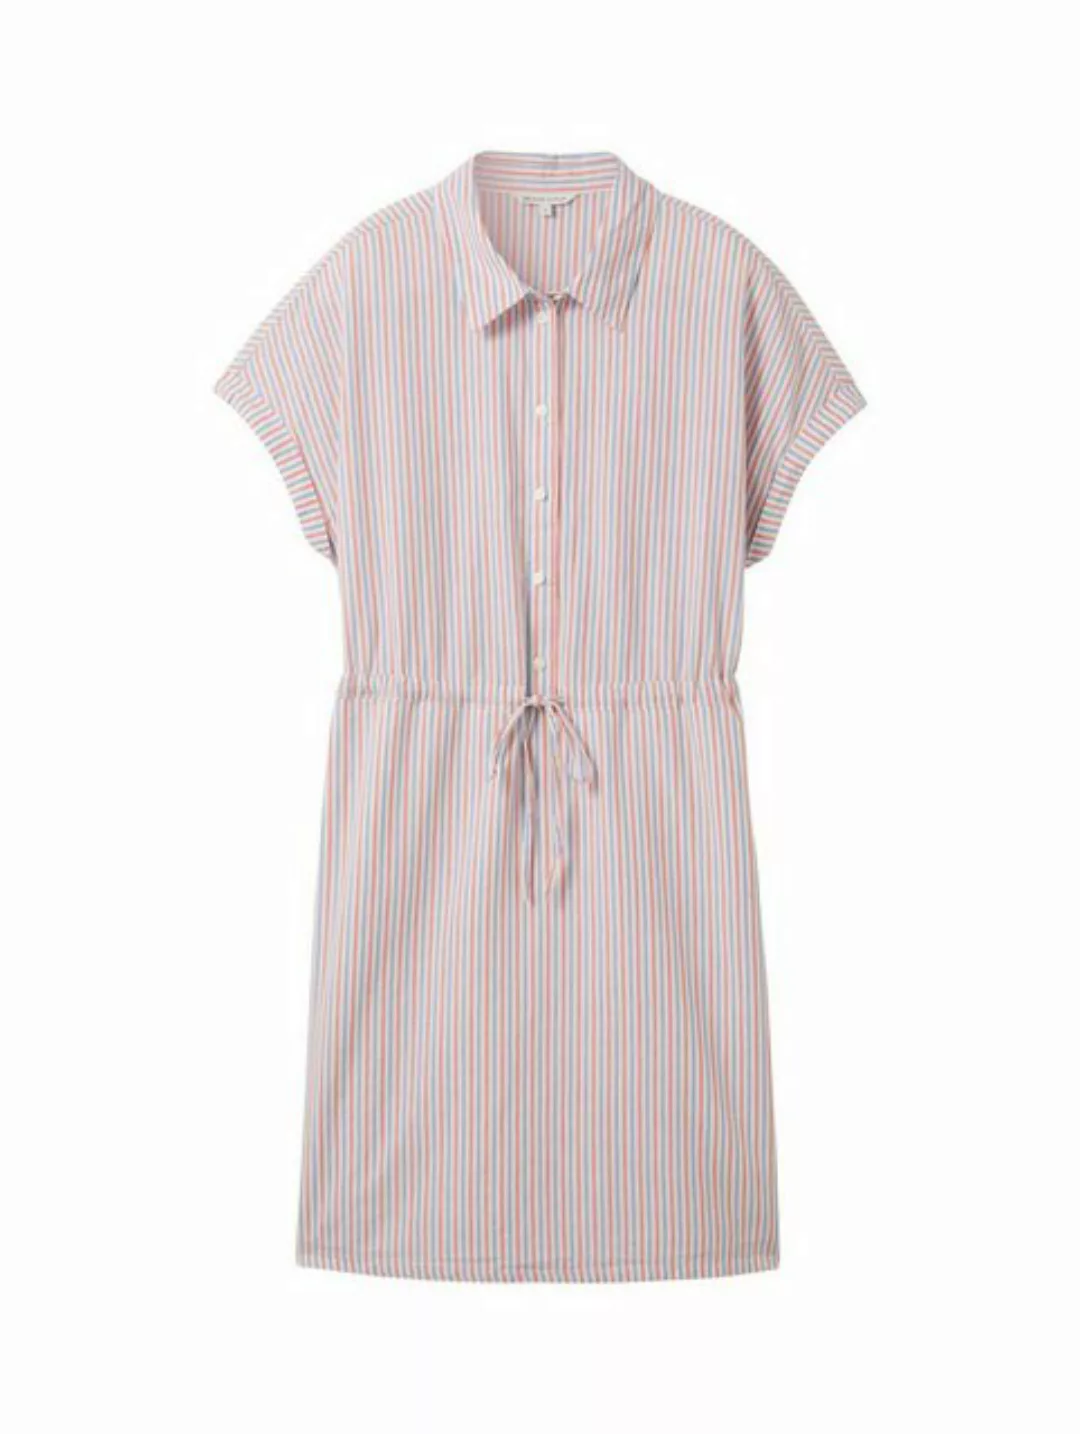 TOM TAILOR Denim Sommerkleid striped mini dress, blue red white vertical st günstig online kaufen